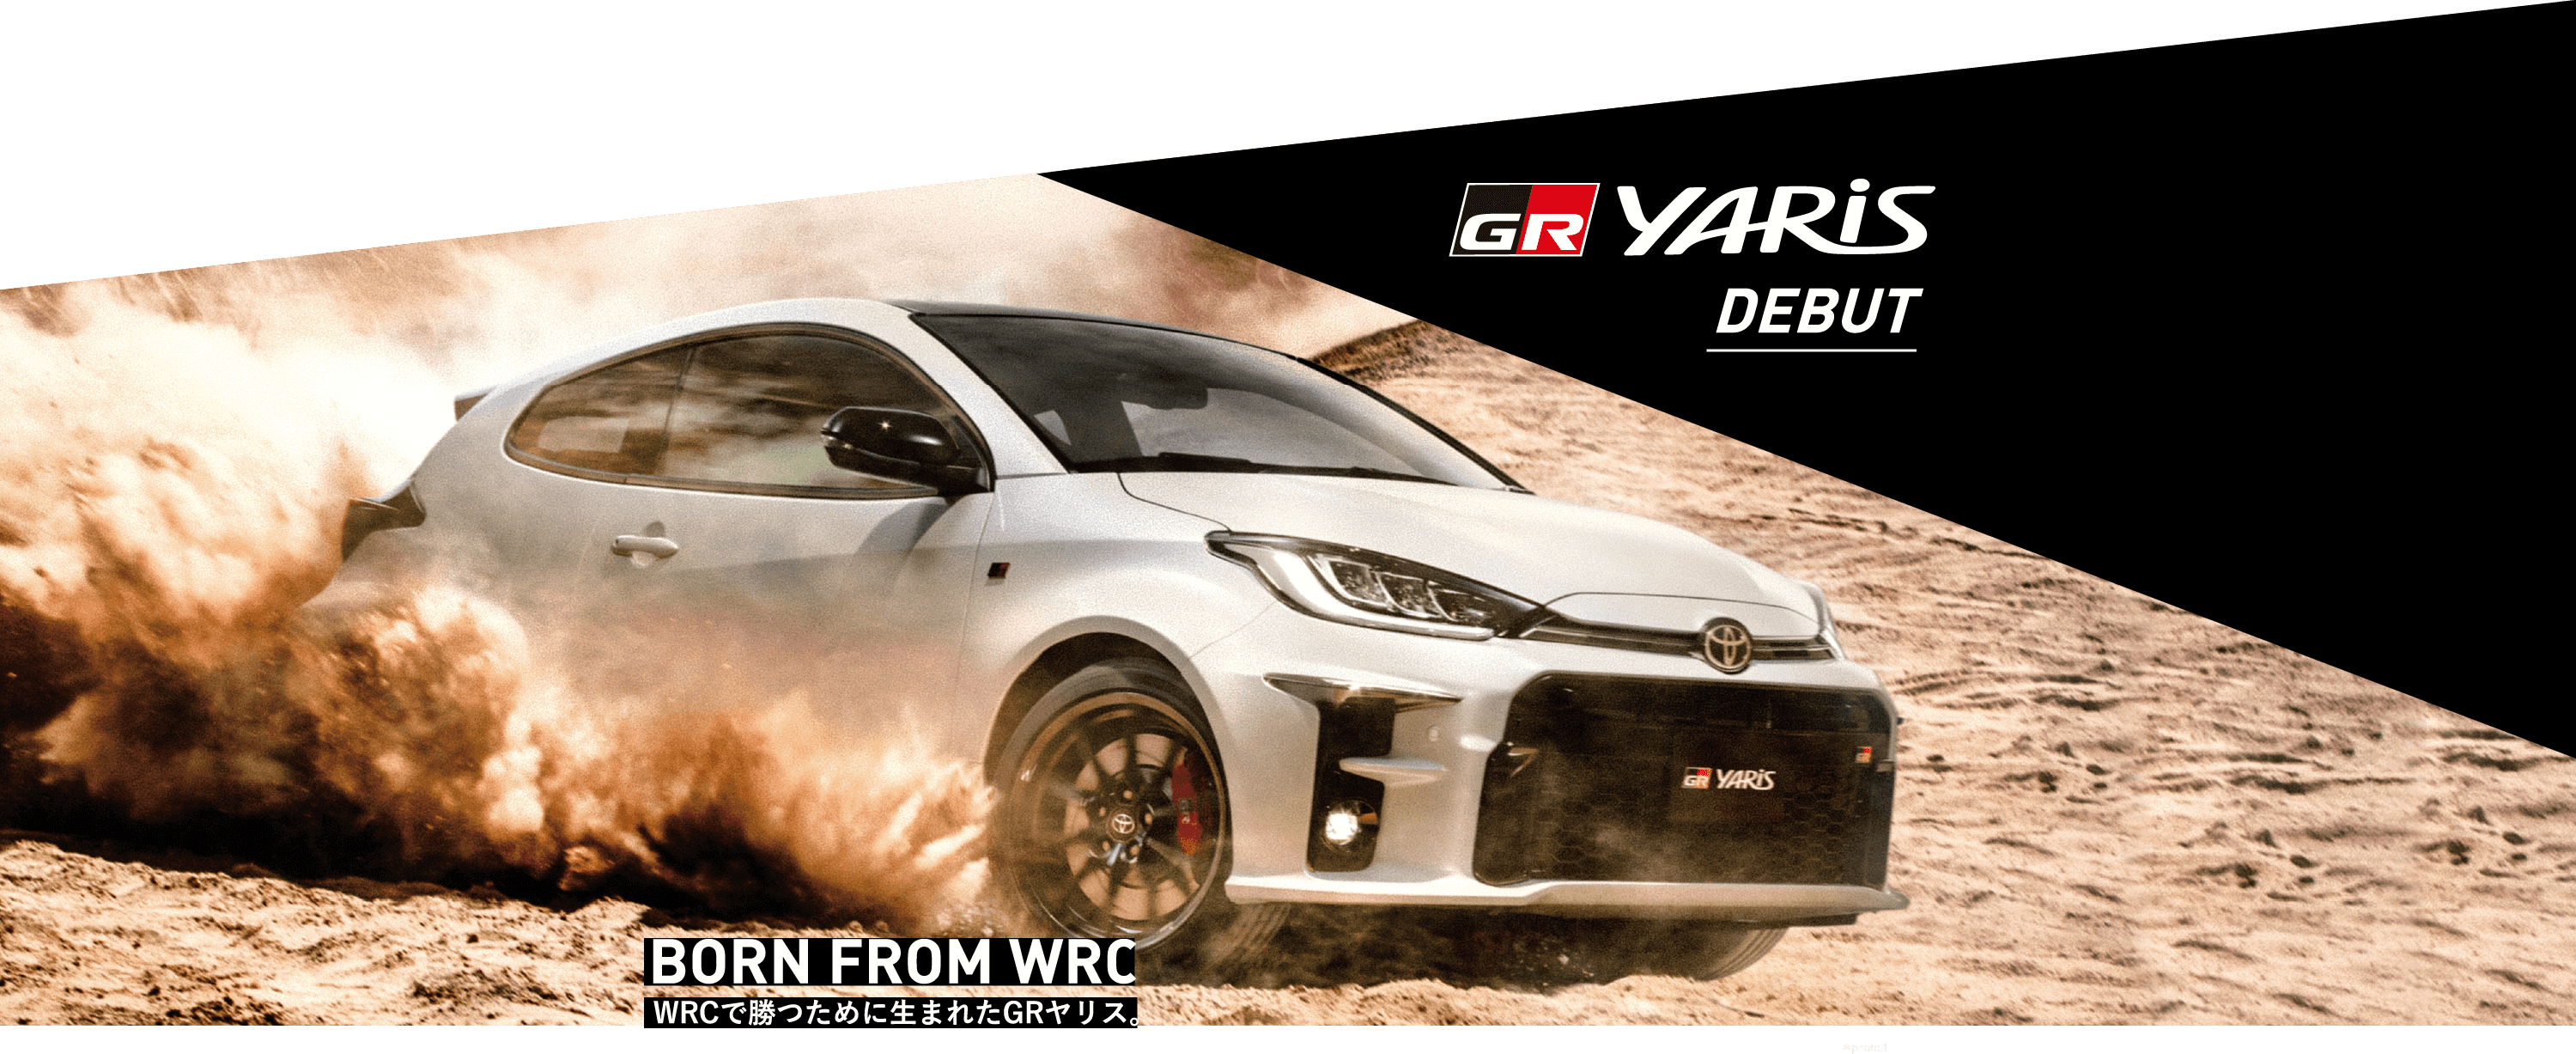 WRCで勝つために生まれたGR-YARIS